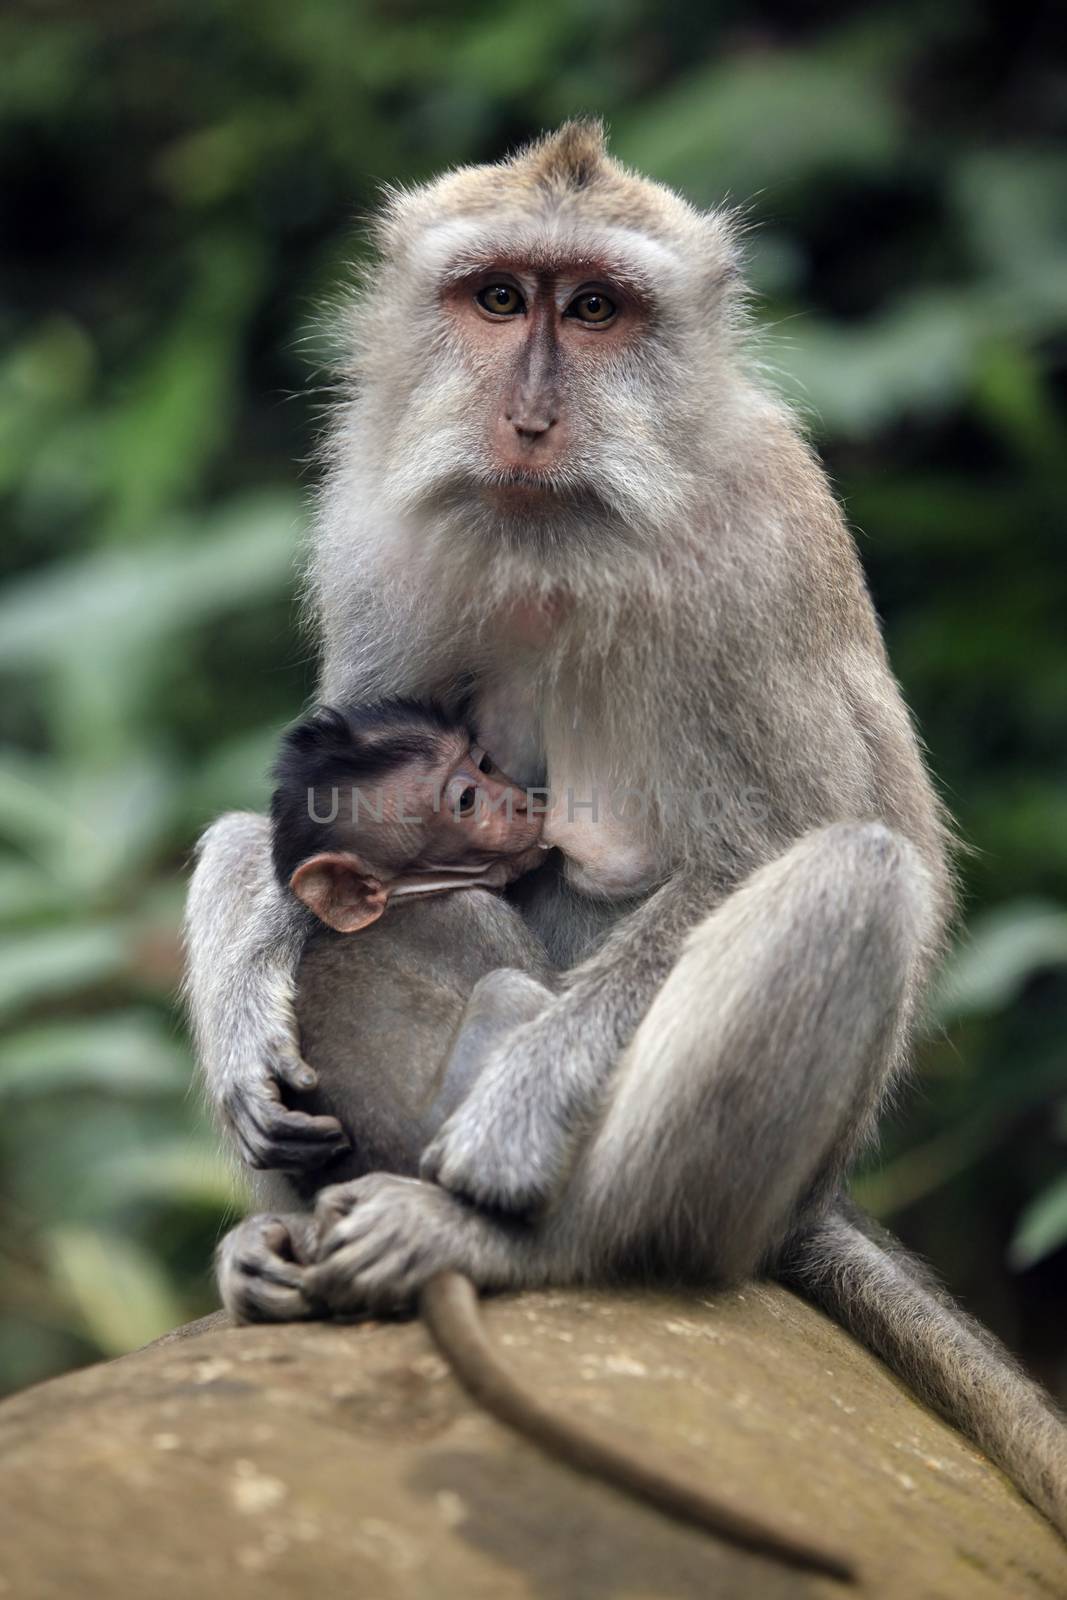 Family of monkeys. Monkeys forest on Bali. Indonesia